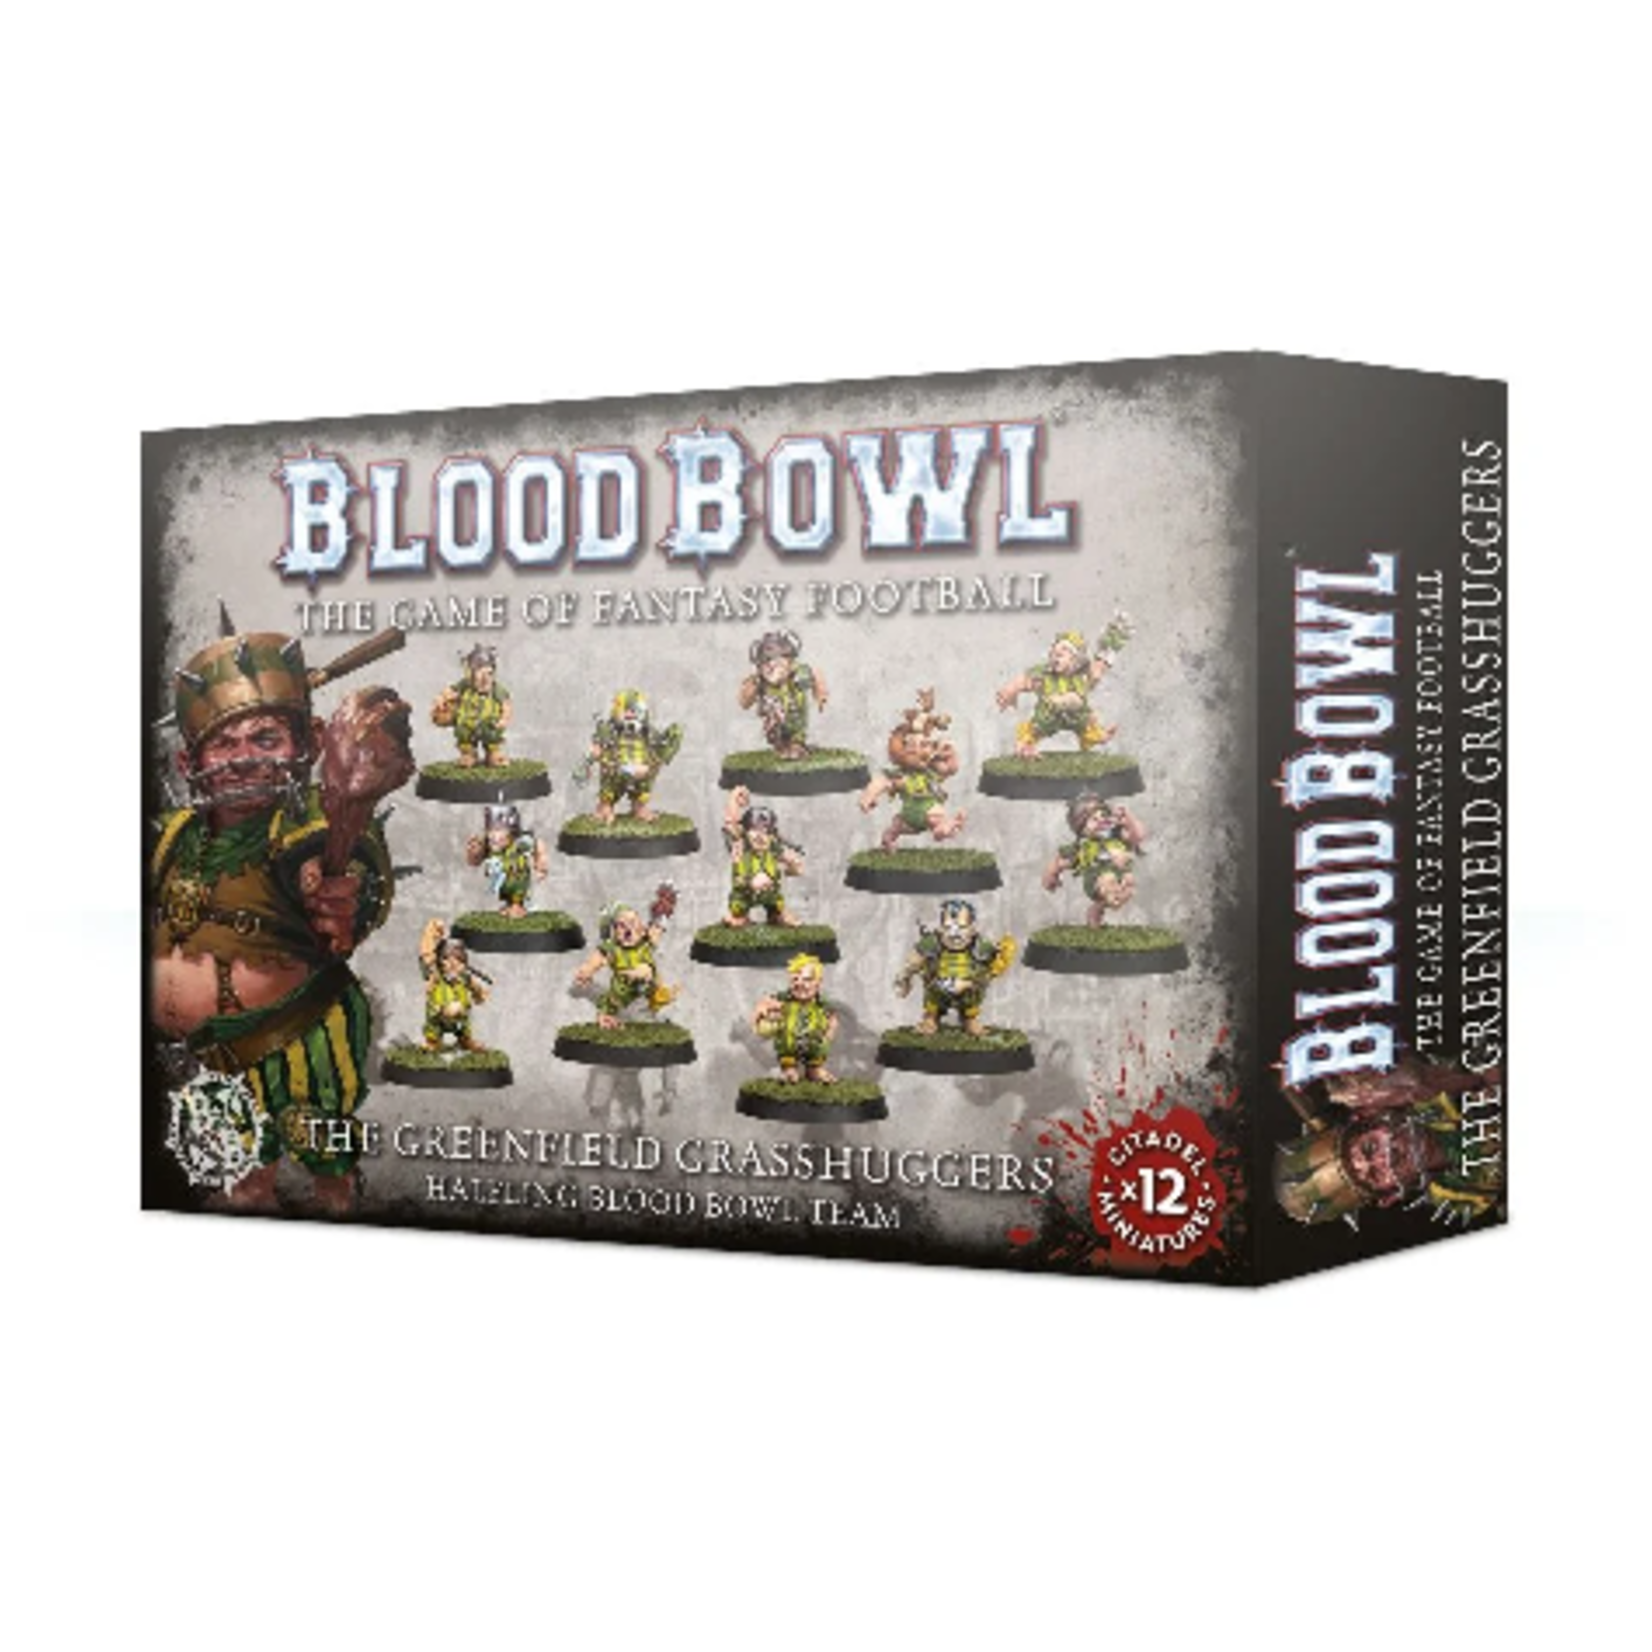 Blood Bowl: The Greenfield Grasshuggers - Halfling Team